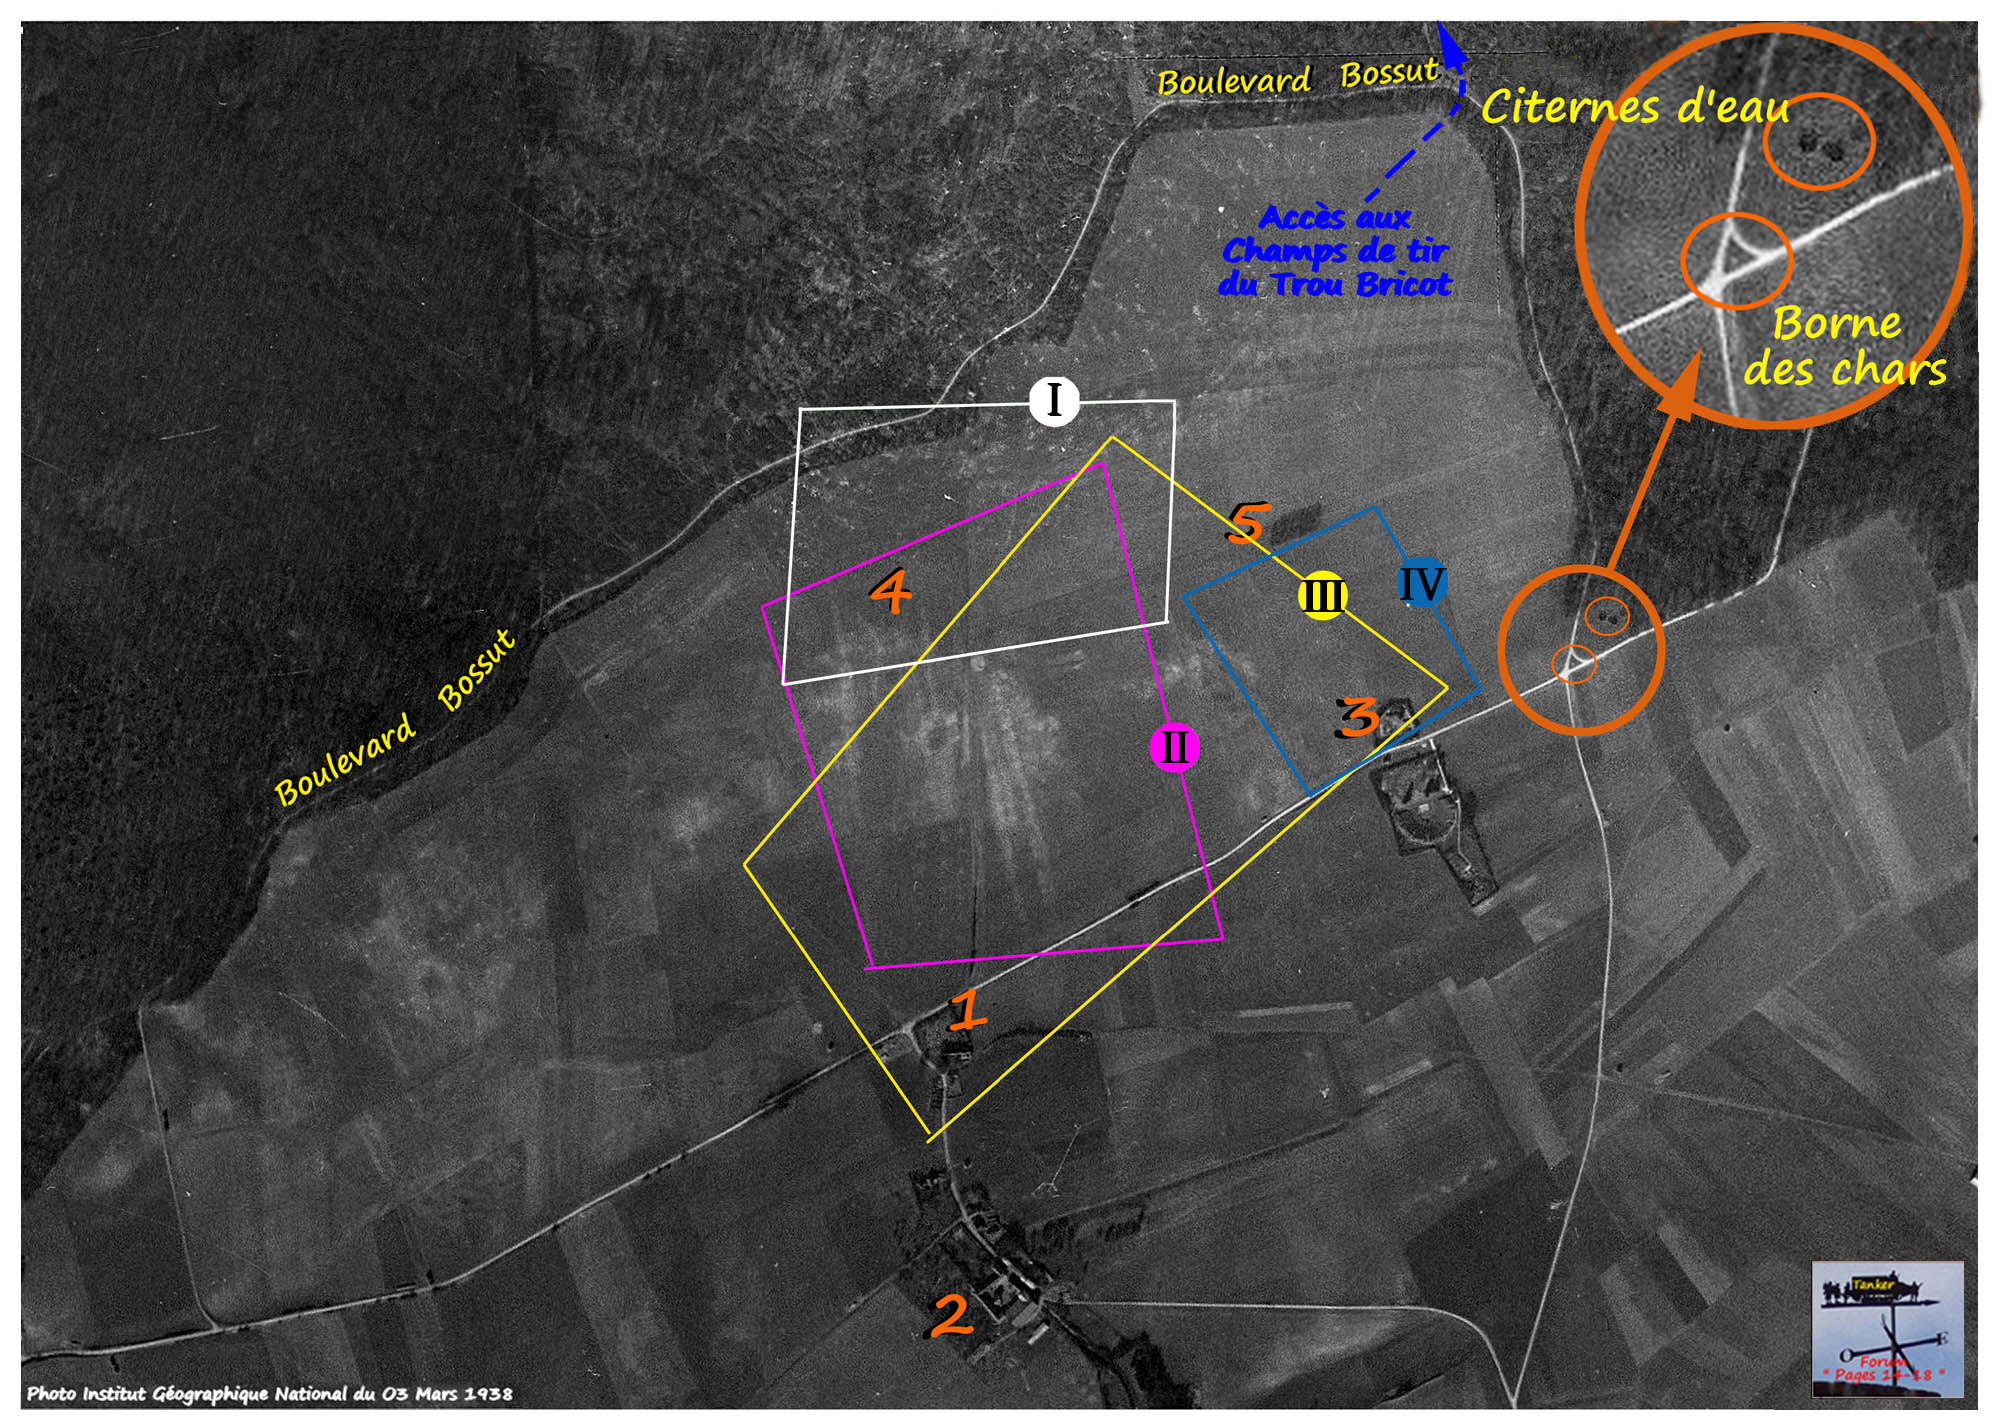 04 - Terrain d'exercice de Champlieu  (01a).jpg